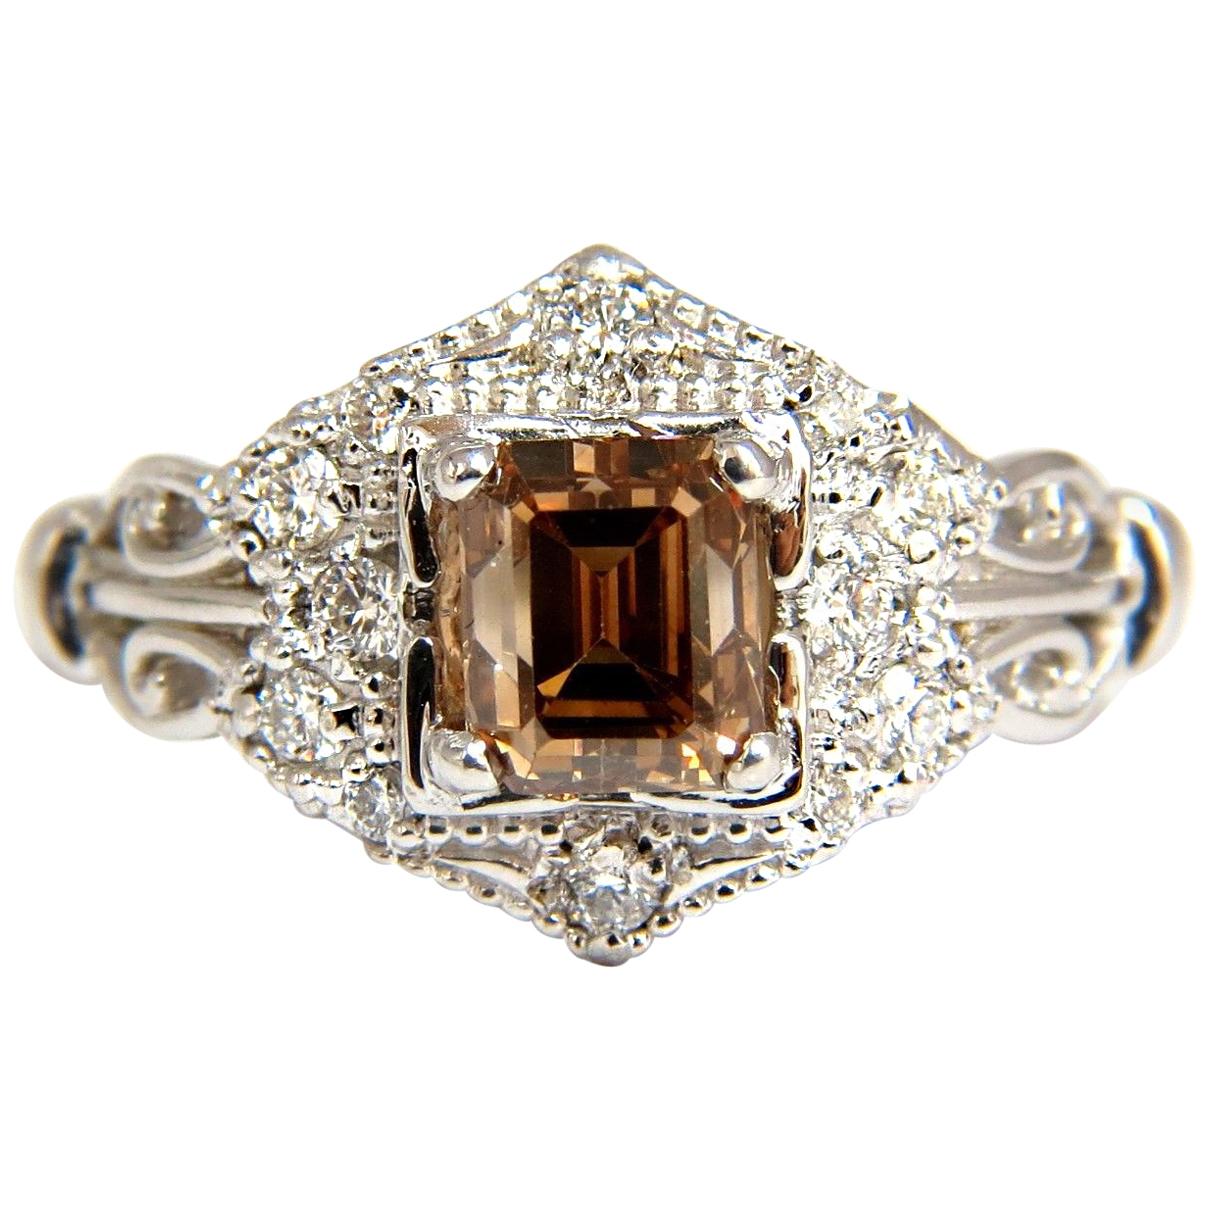 1.39 Carat Natural Fancy Brown Emerald Cut Diamond Ring VS2 Victorian Deco For Sale